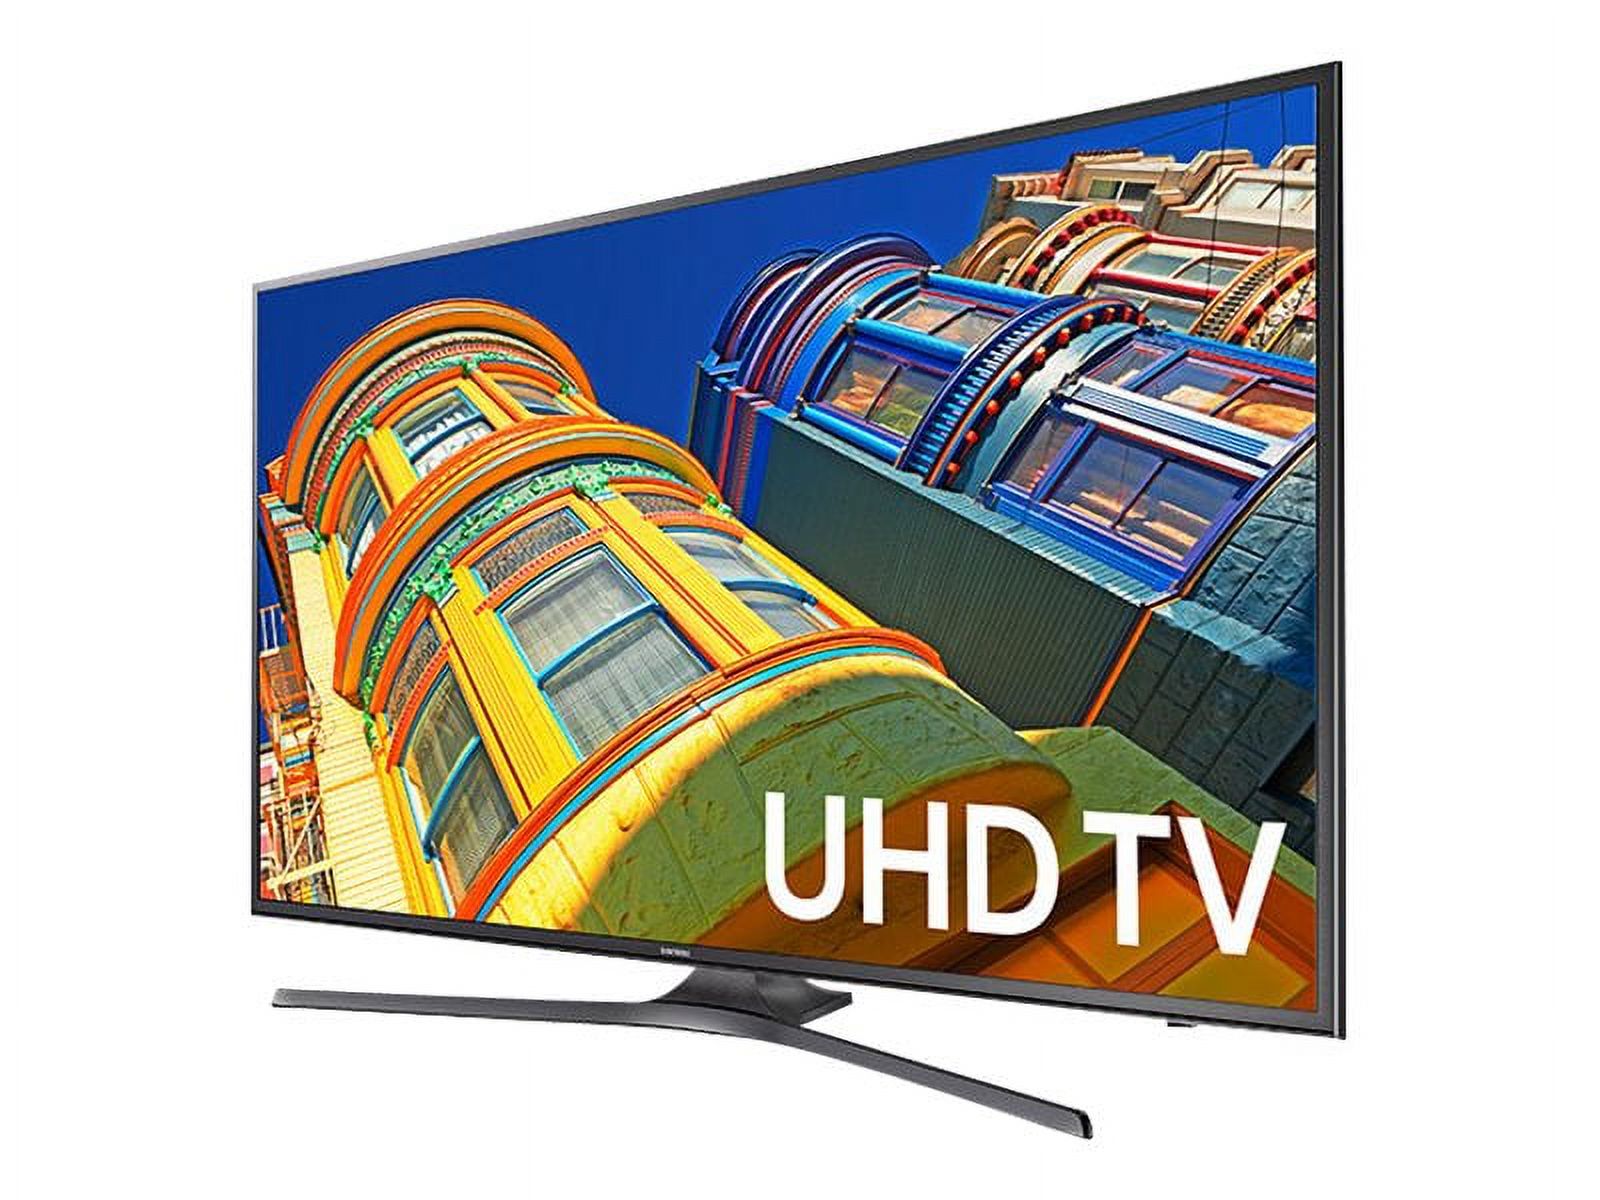 Samsung 55-inch 4k ultra hd smart led tv w/ wifi, 2016 model - un55ku6300 - image 1 of 7